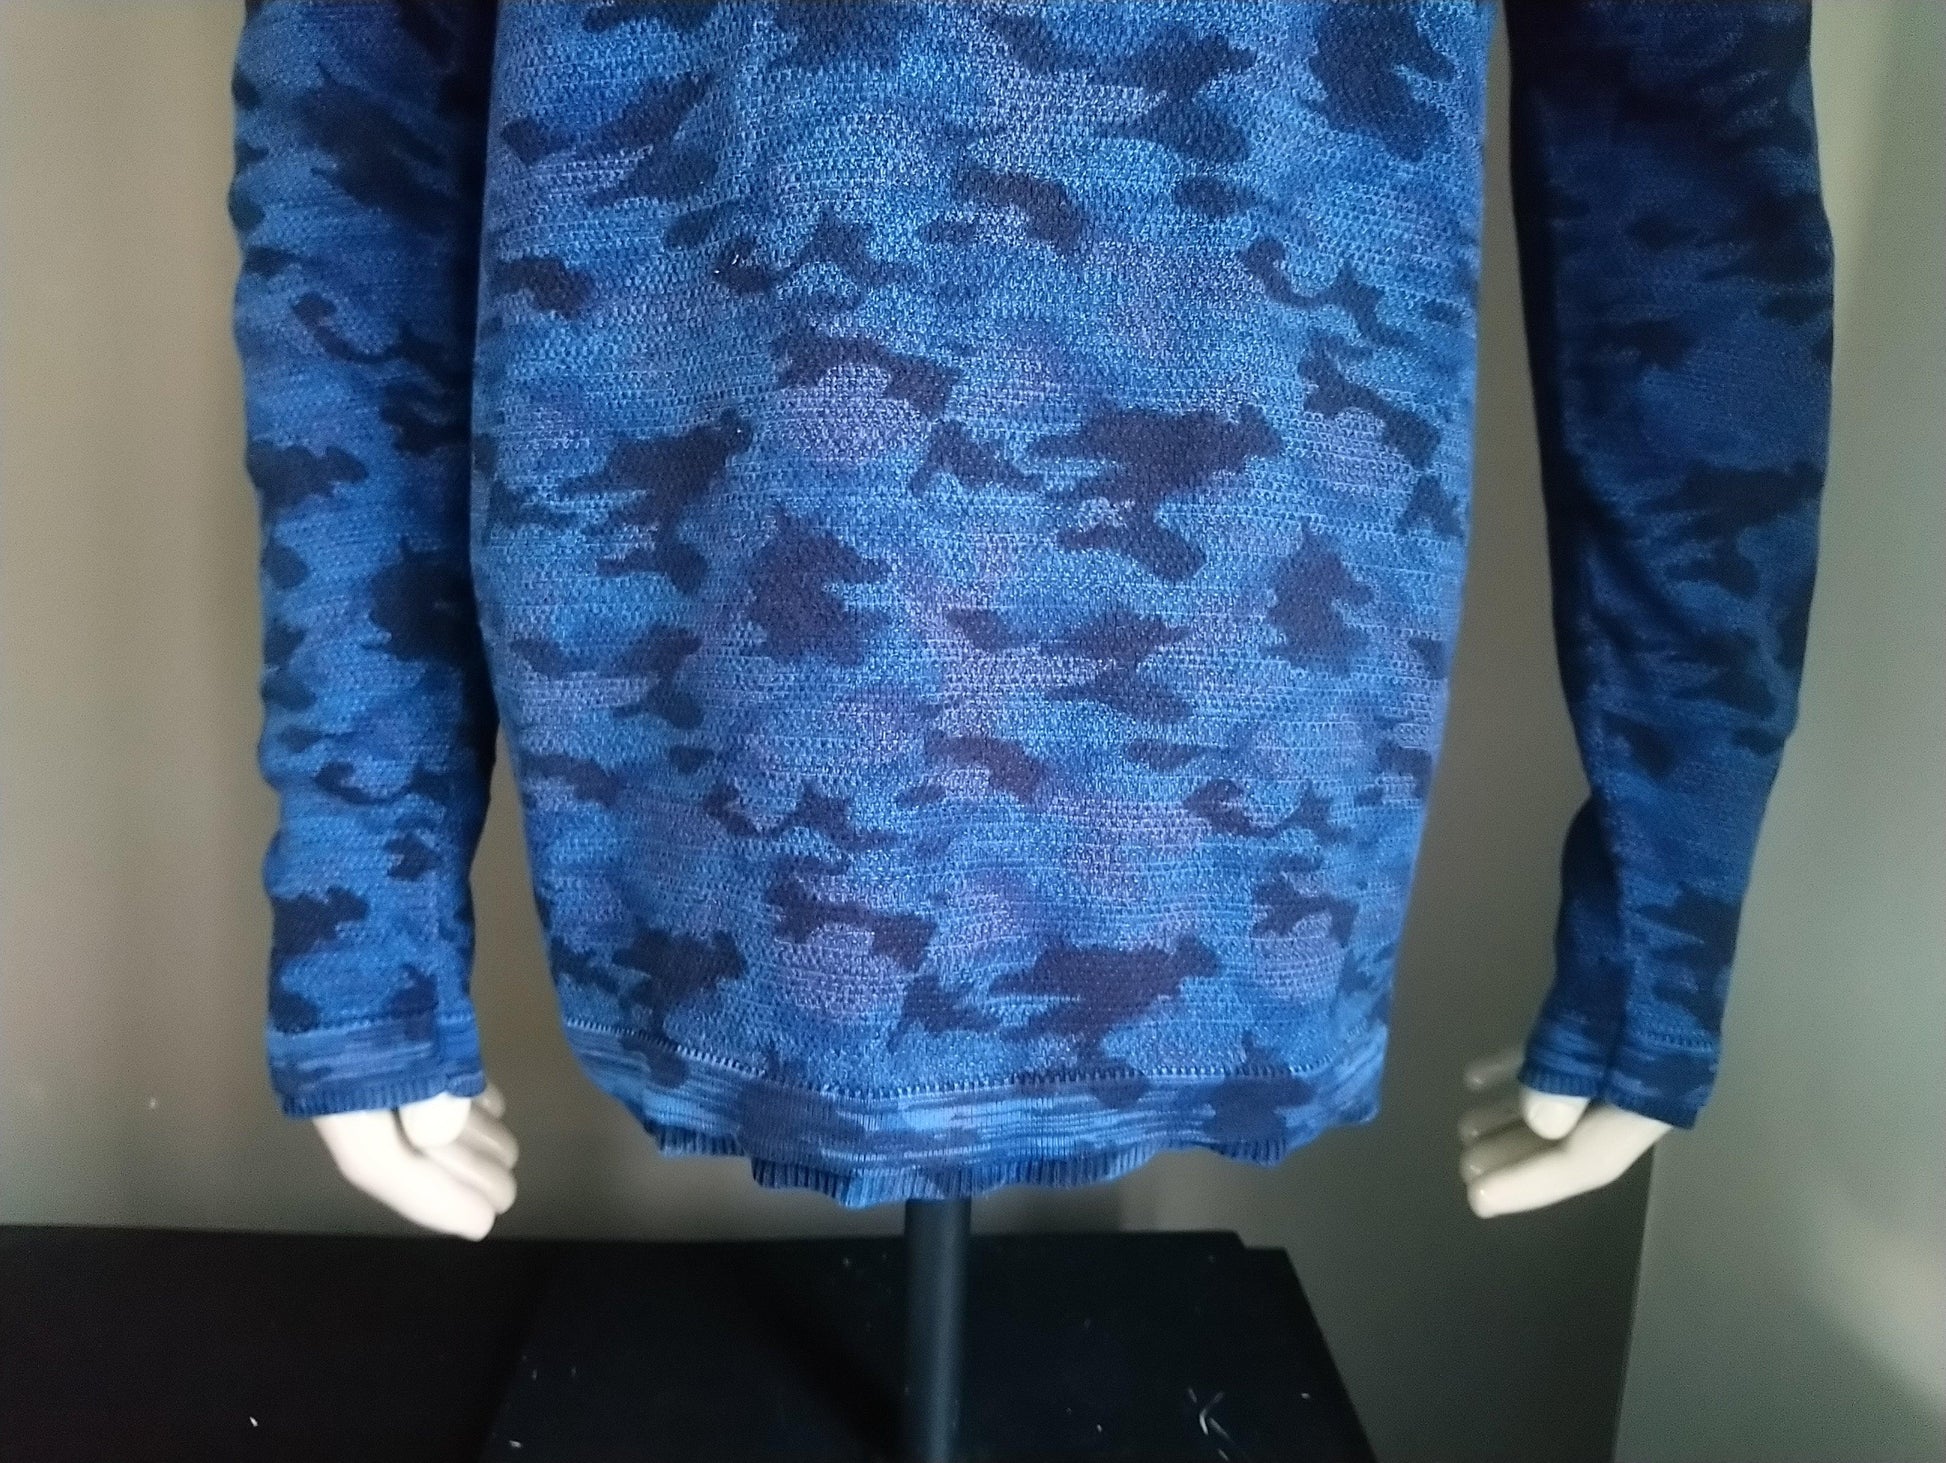 Chasin' trui. Blauwe camouflage print. Maat XL. - EcoGents